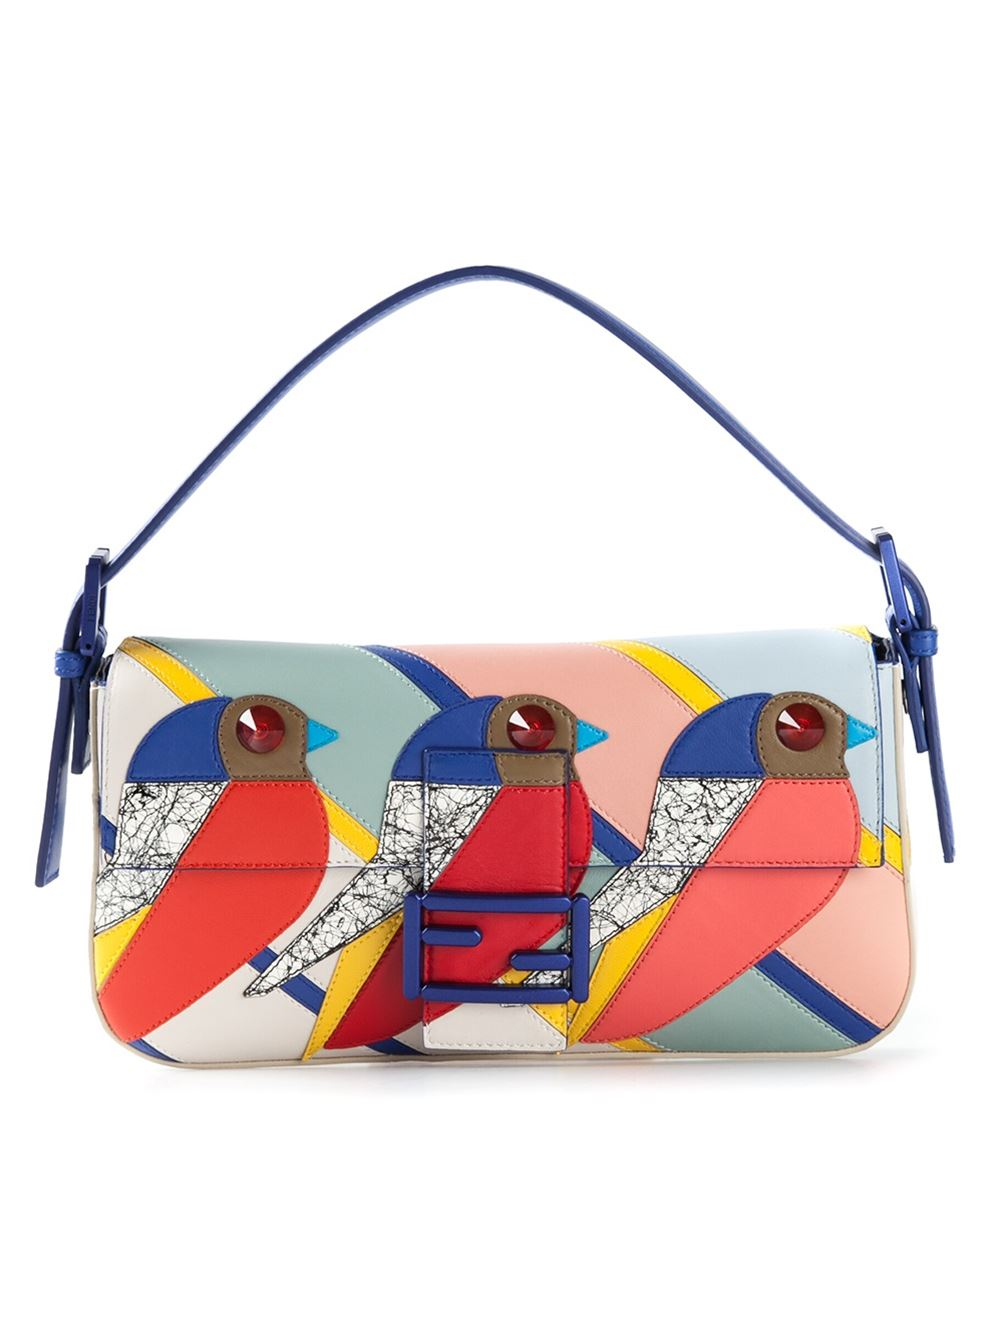 Fendi Baguette Lambskin Shoulder Bag in Multicolor (multicolour) | Lyst